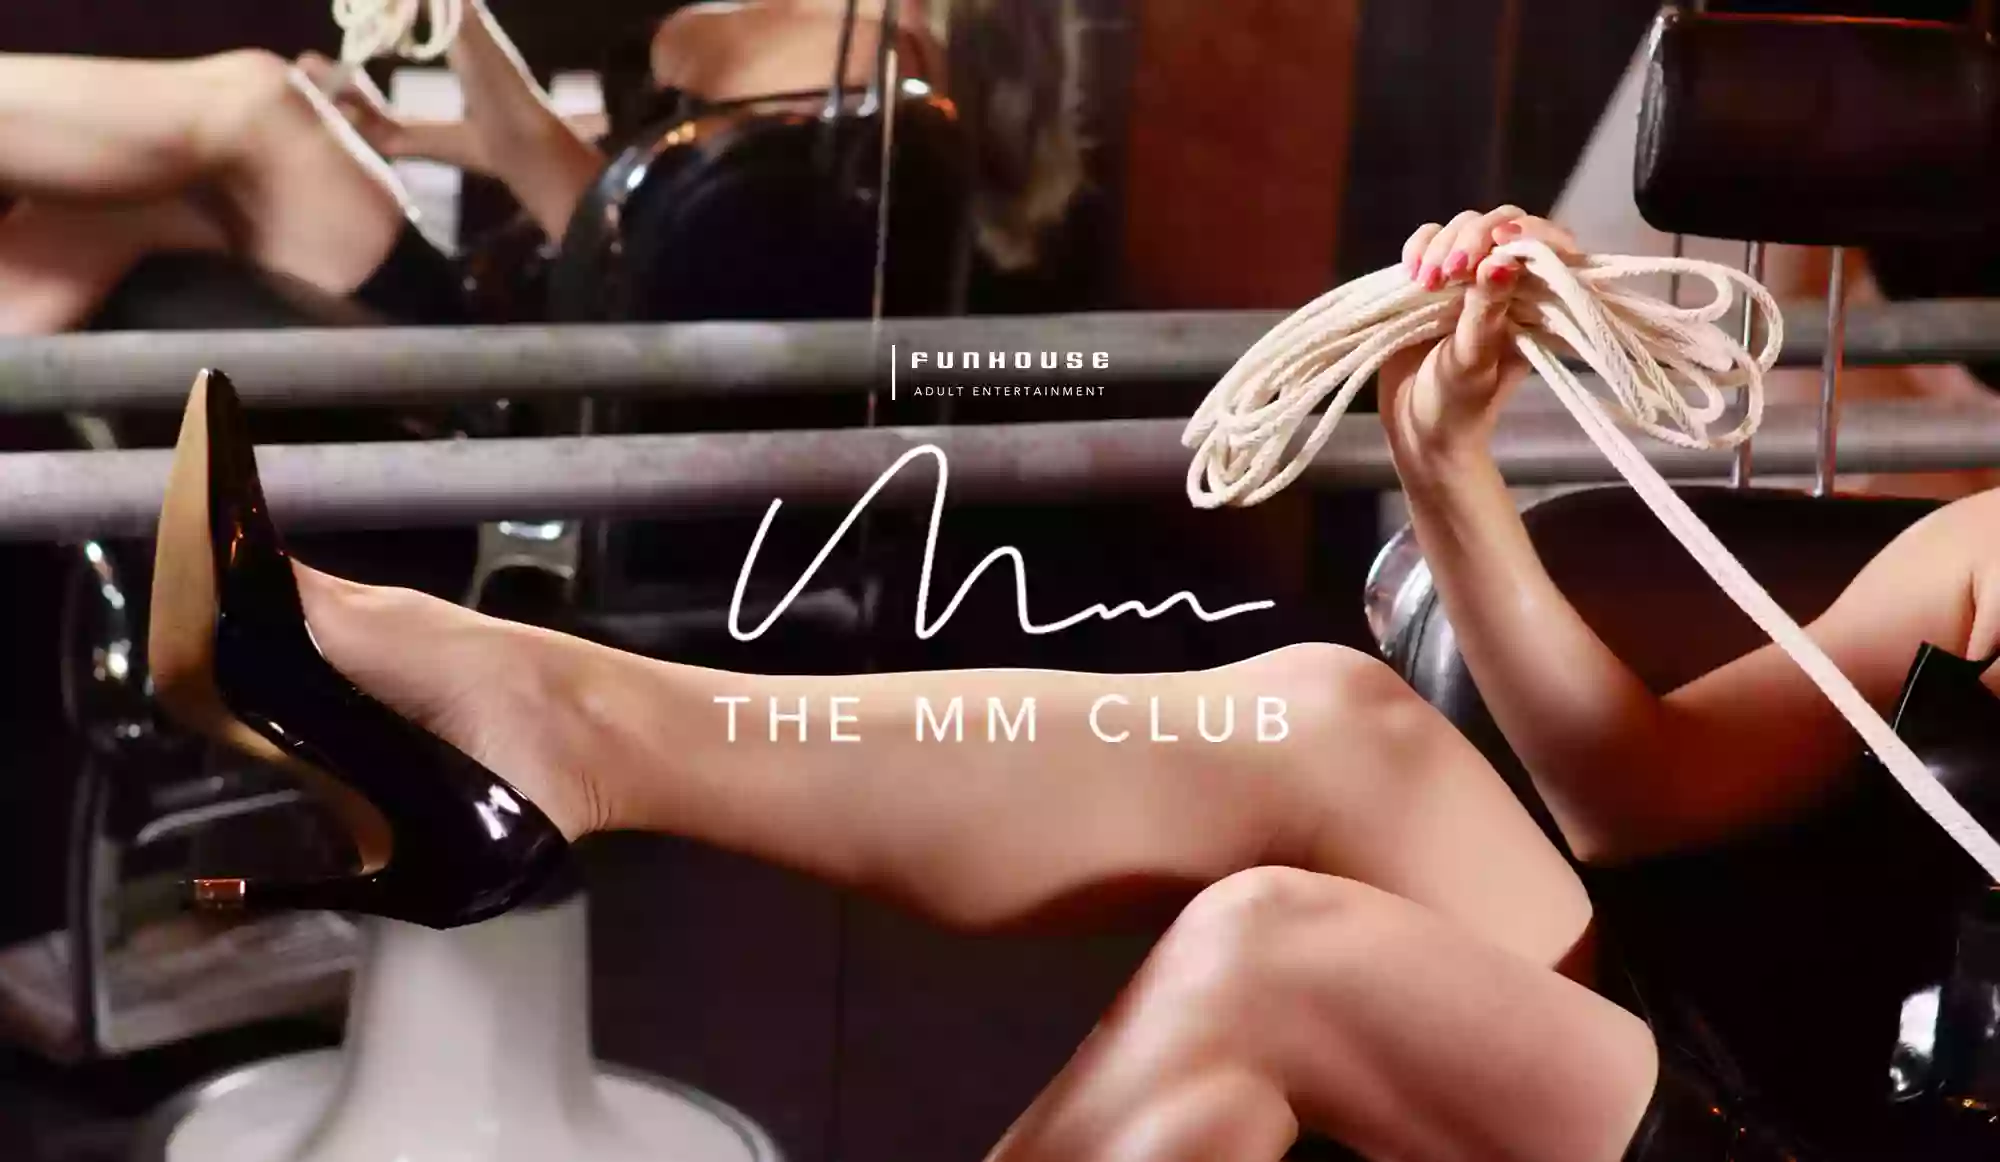 The mm Club